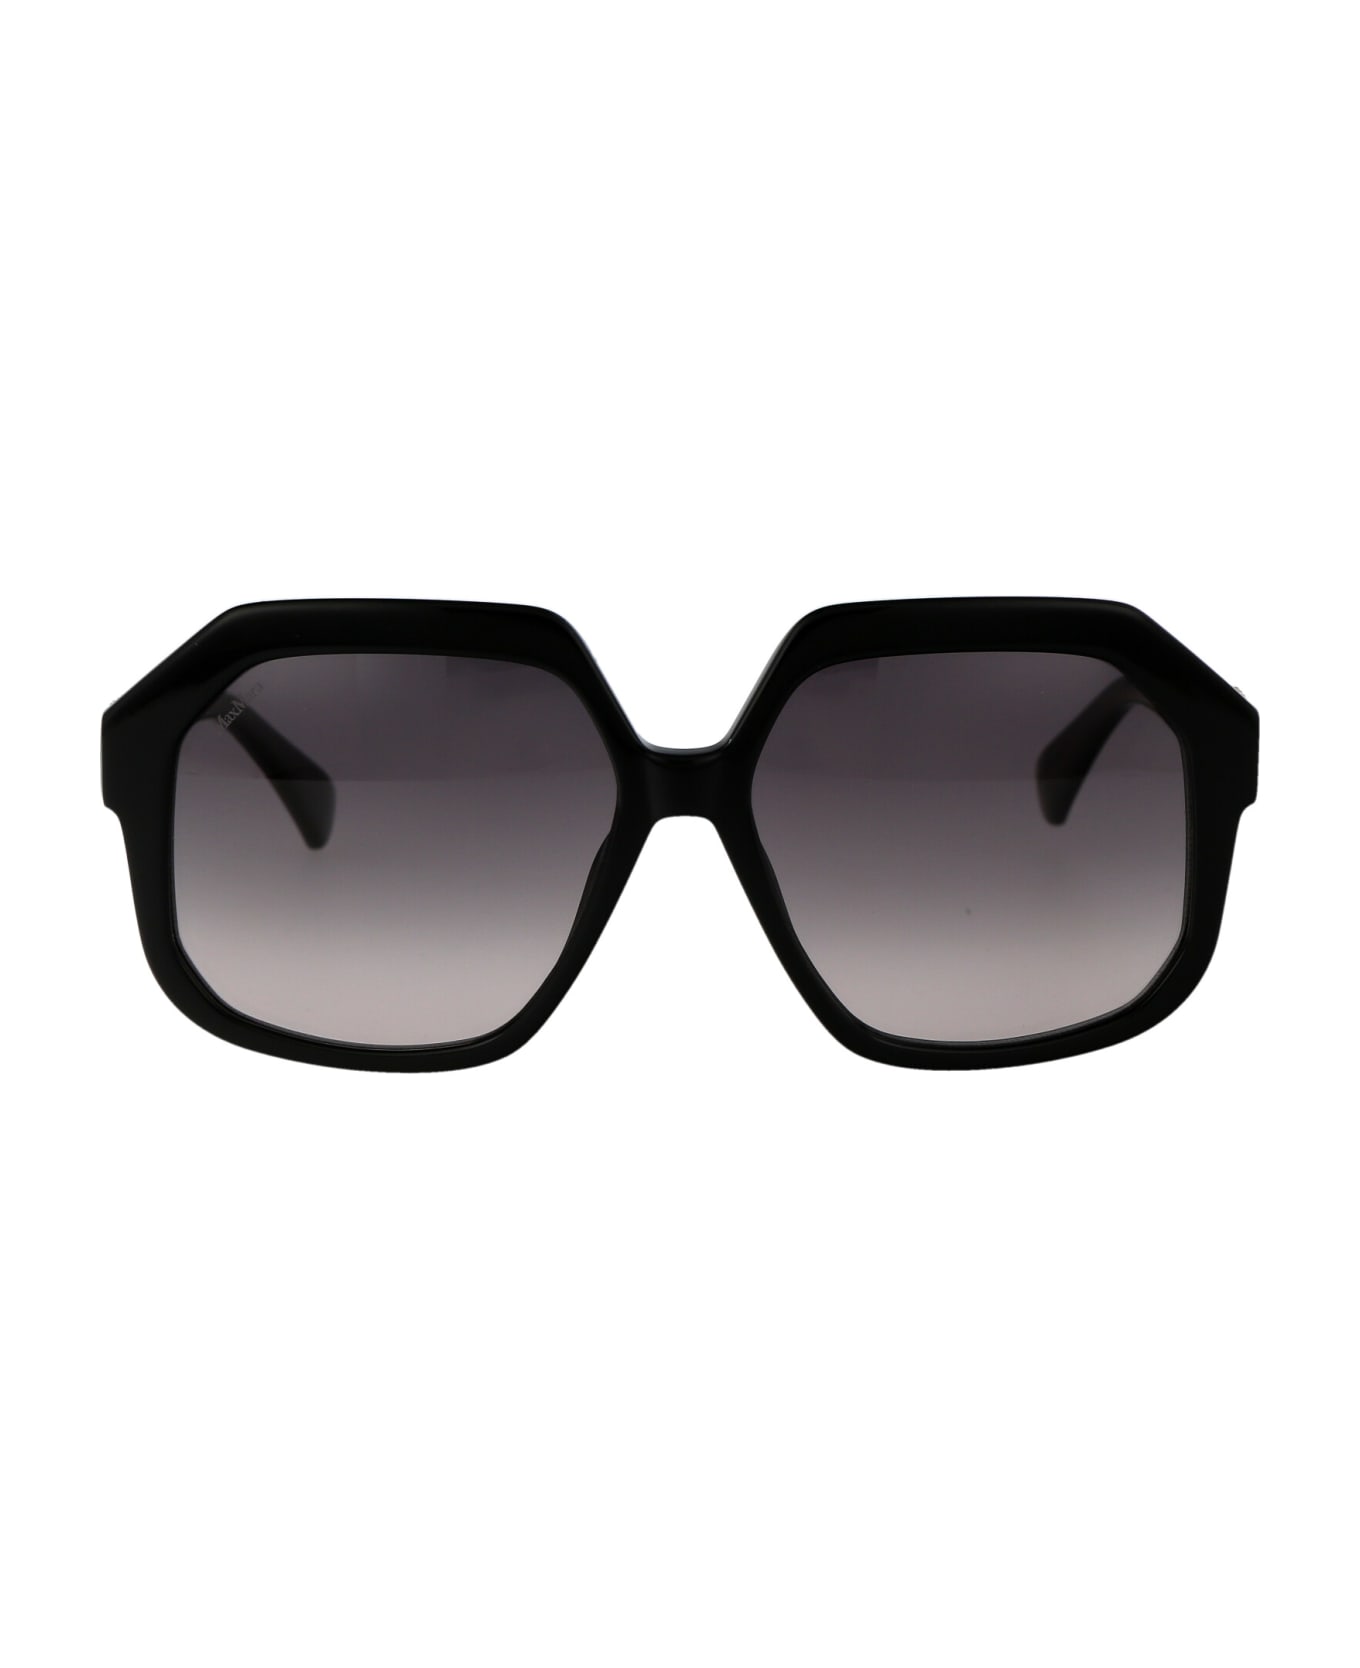 Max Mara Emme12 Sunglasses - 01B Nero Lucido/Fumo Grad サングラス